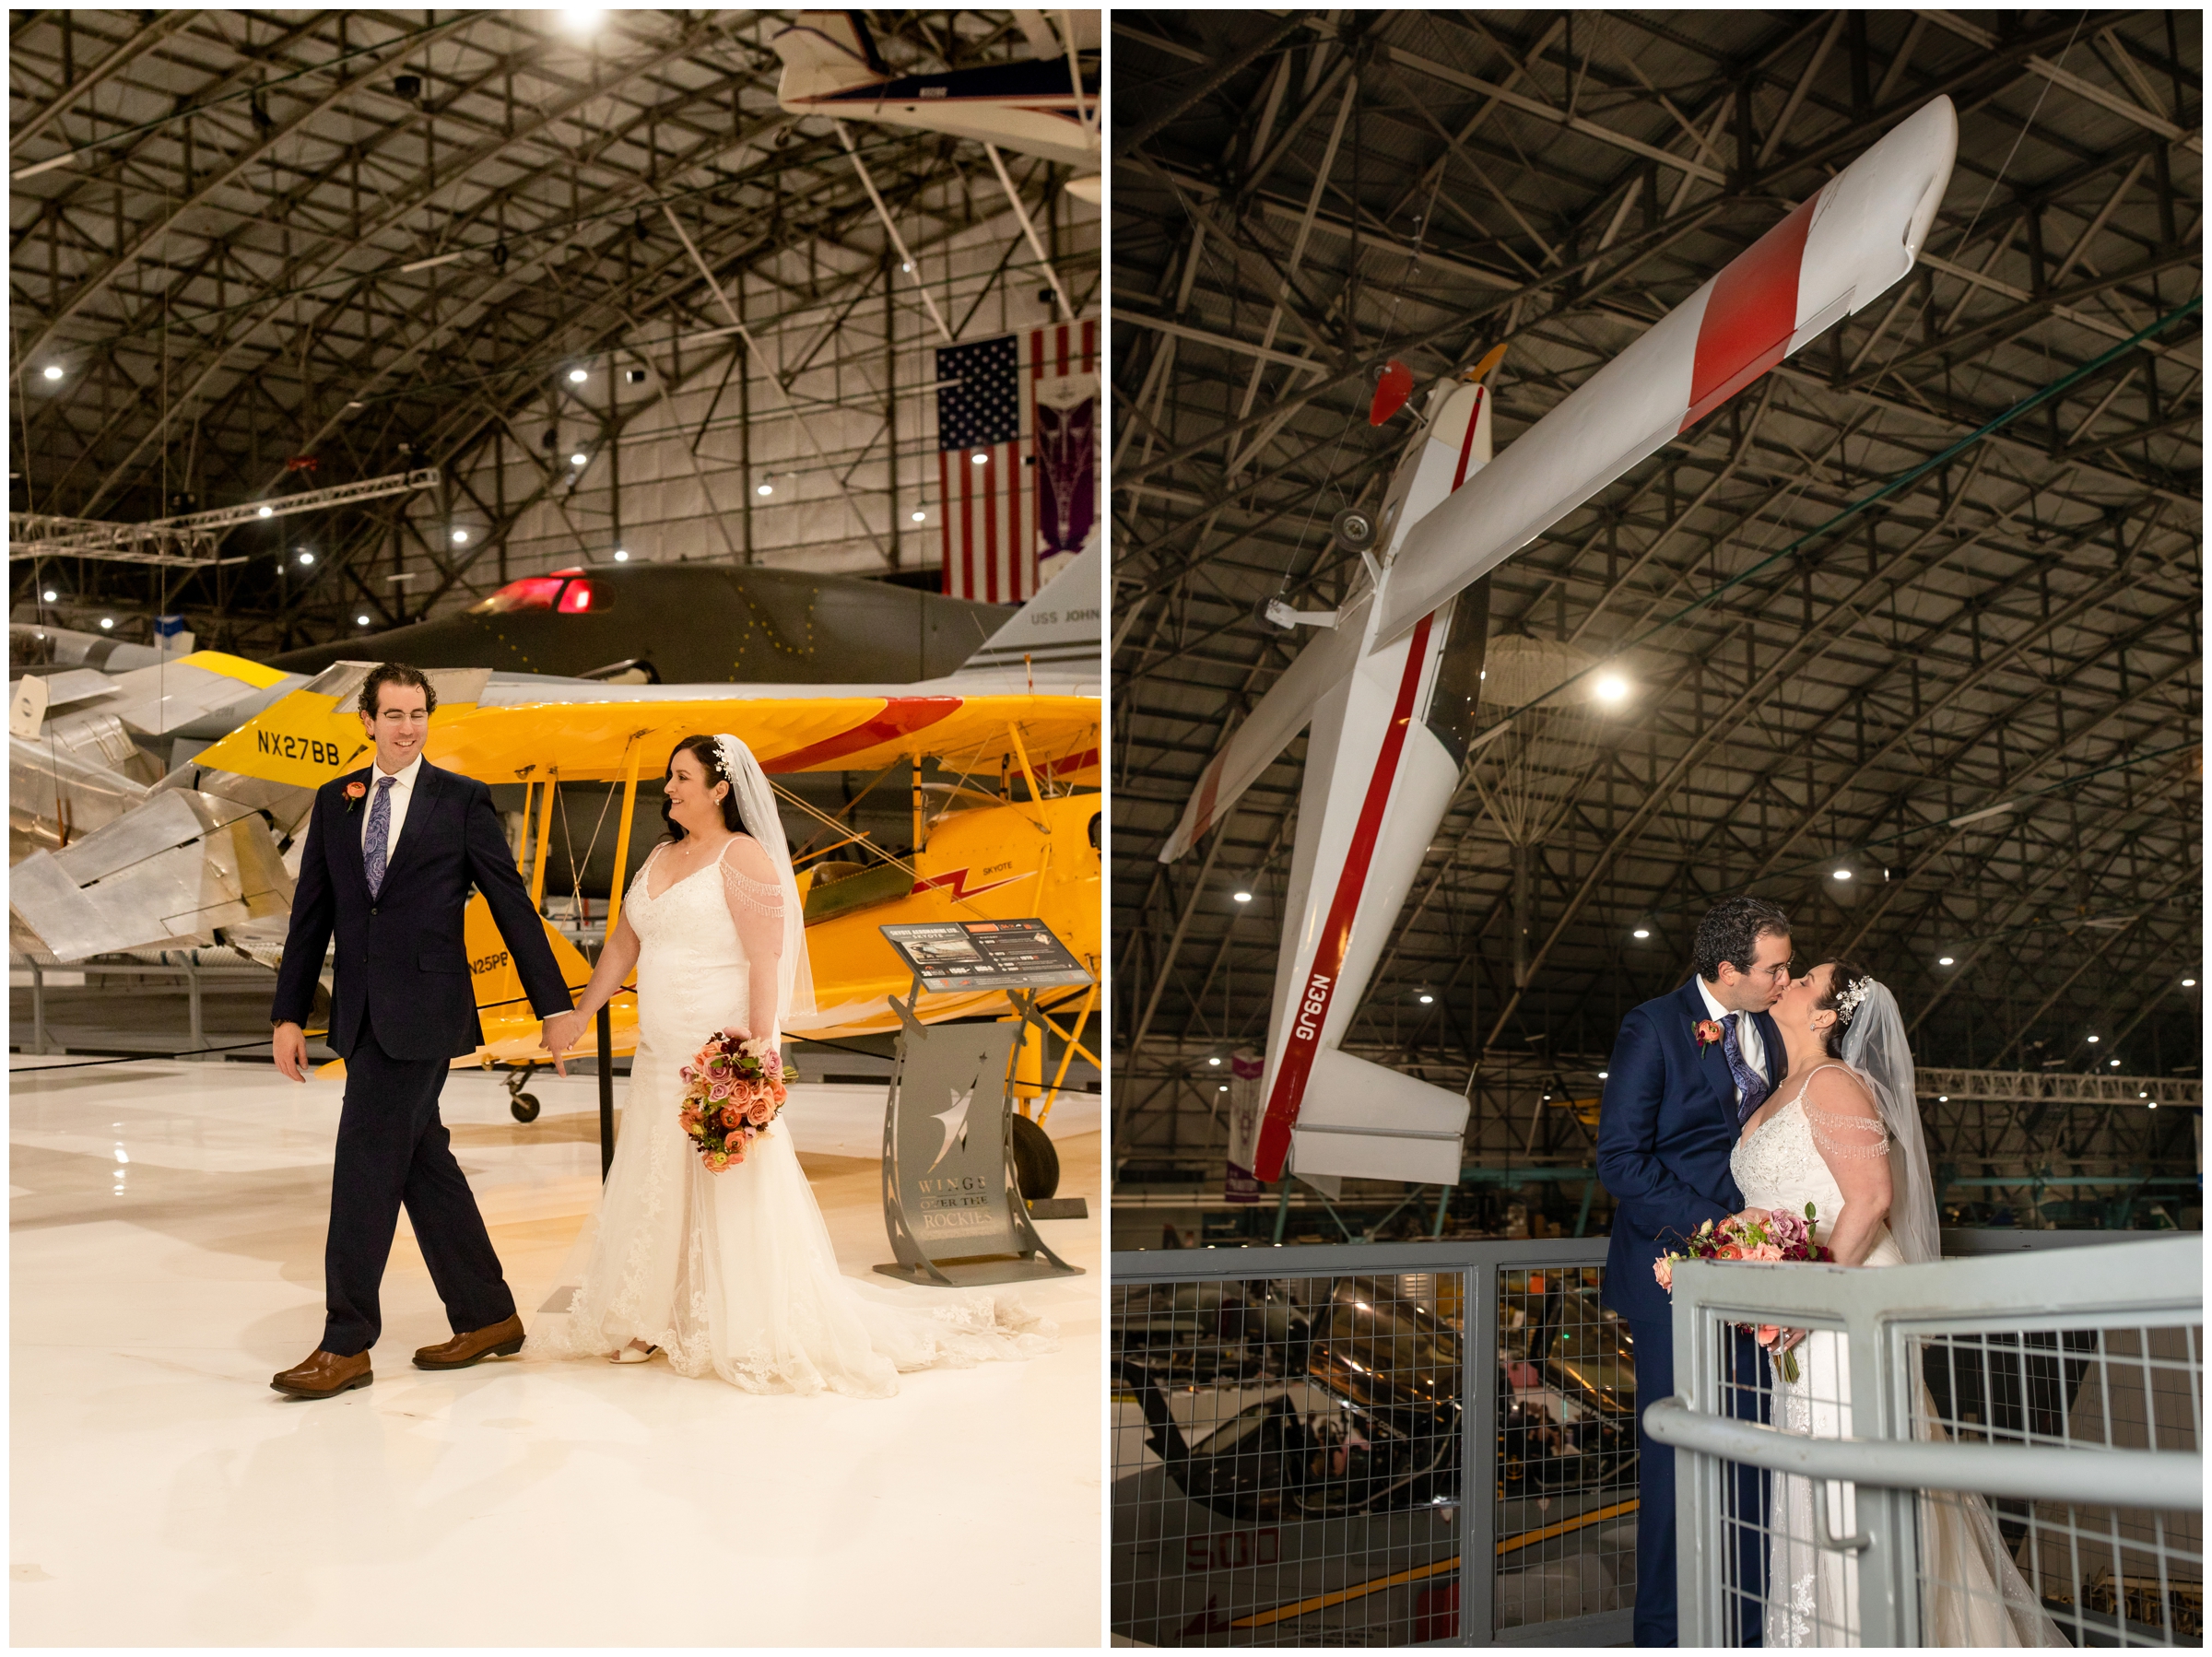 super unique wedding ideas at Wings over the rockies Denver airplane museum venue 